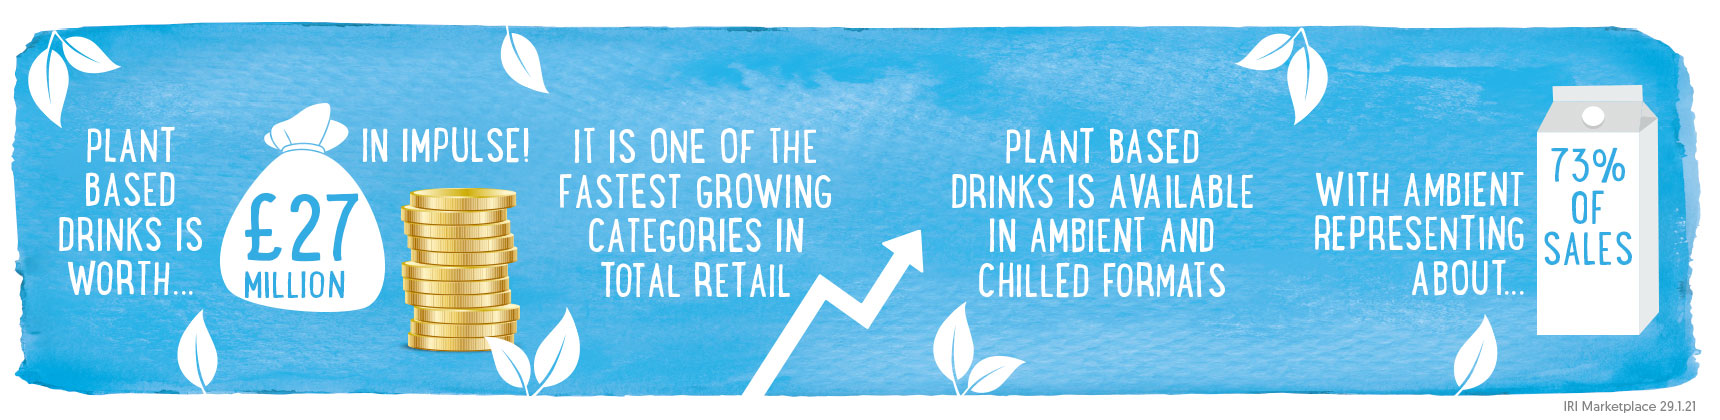 Alpro – plant-based drinks is worth £27 million in impulse!